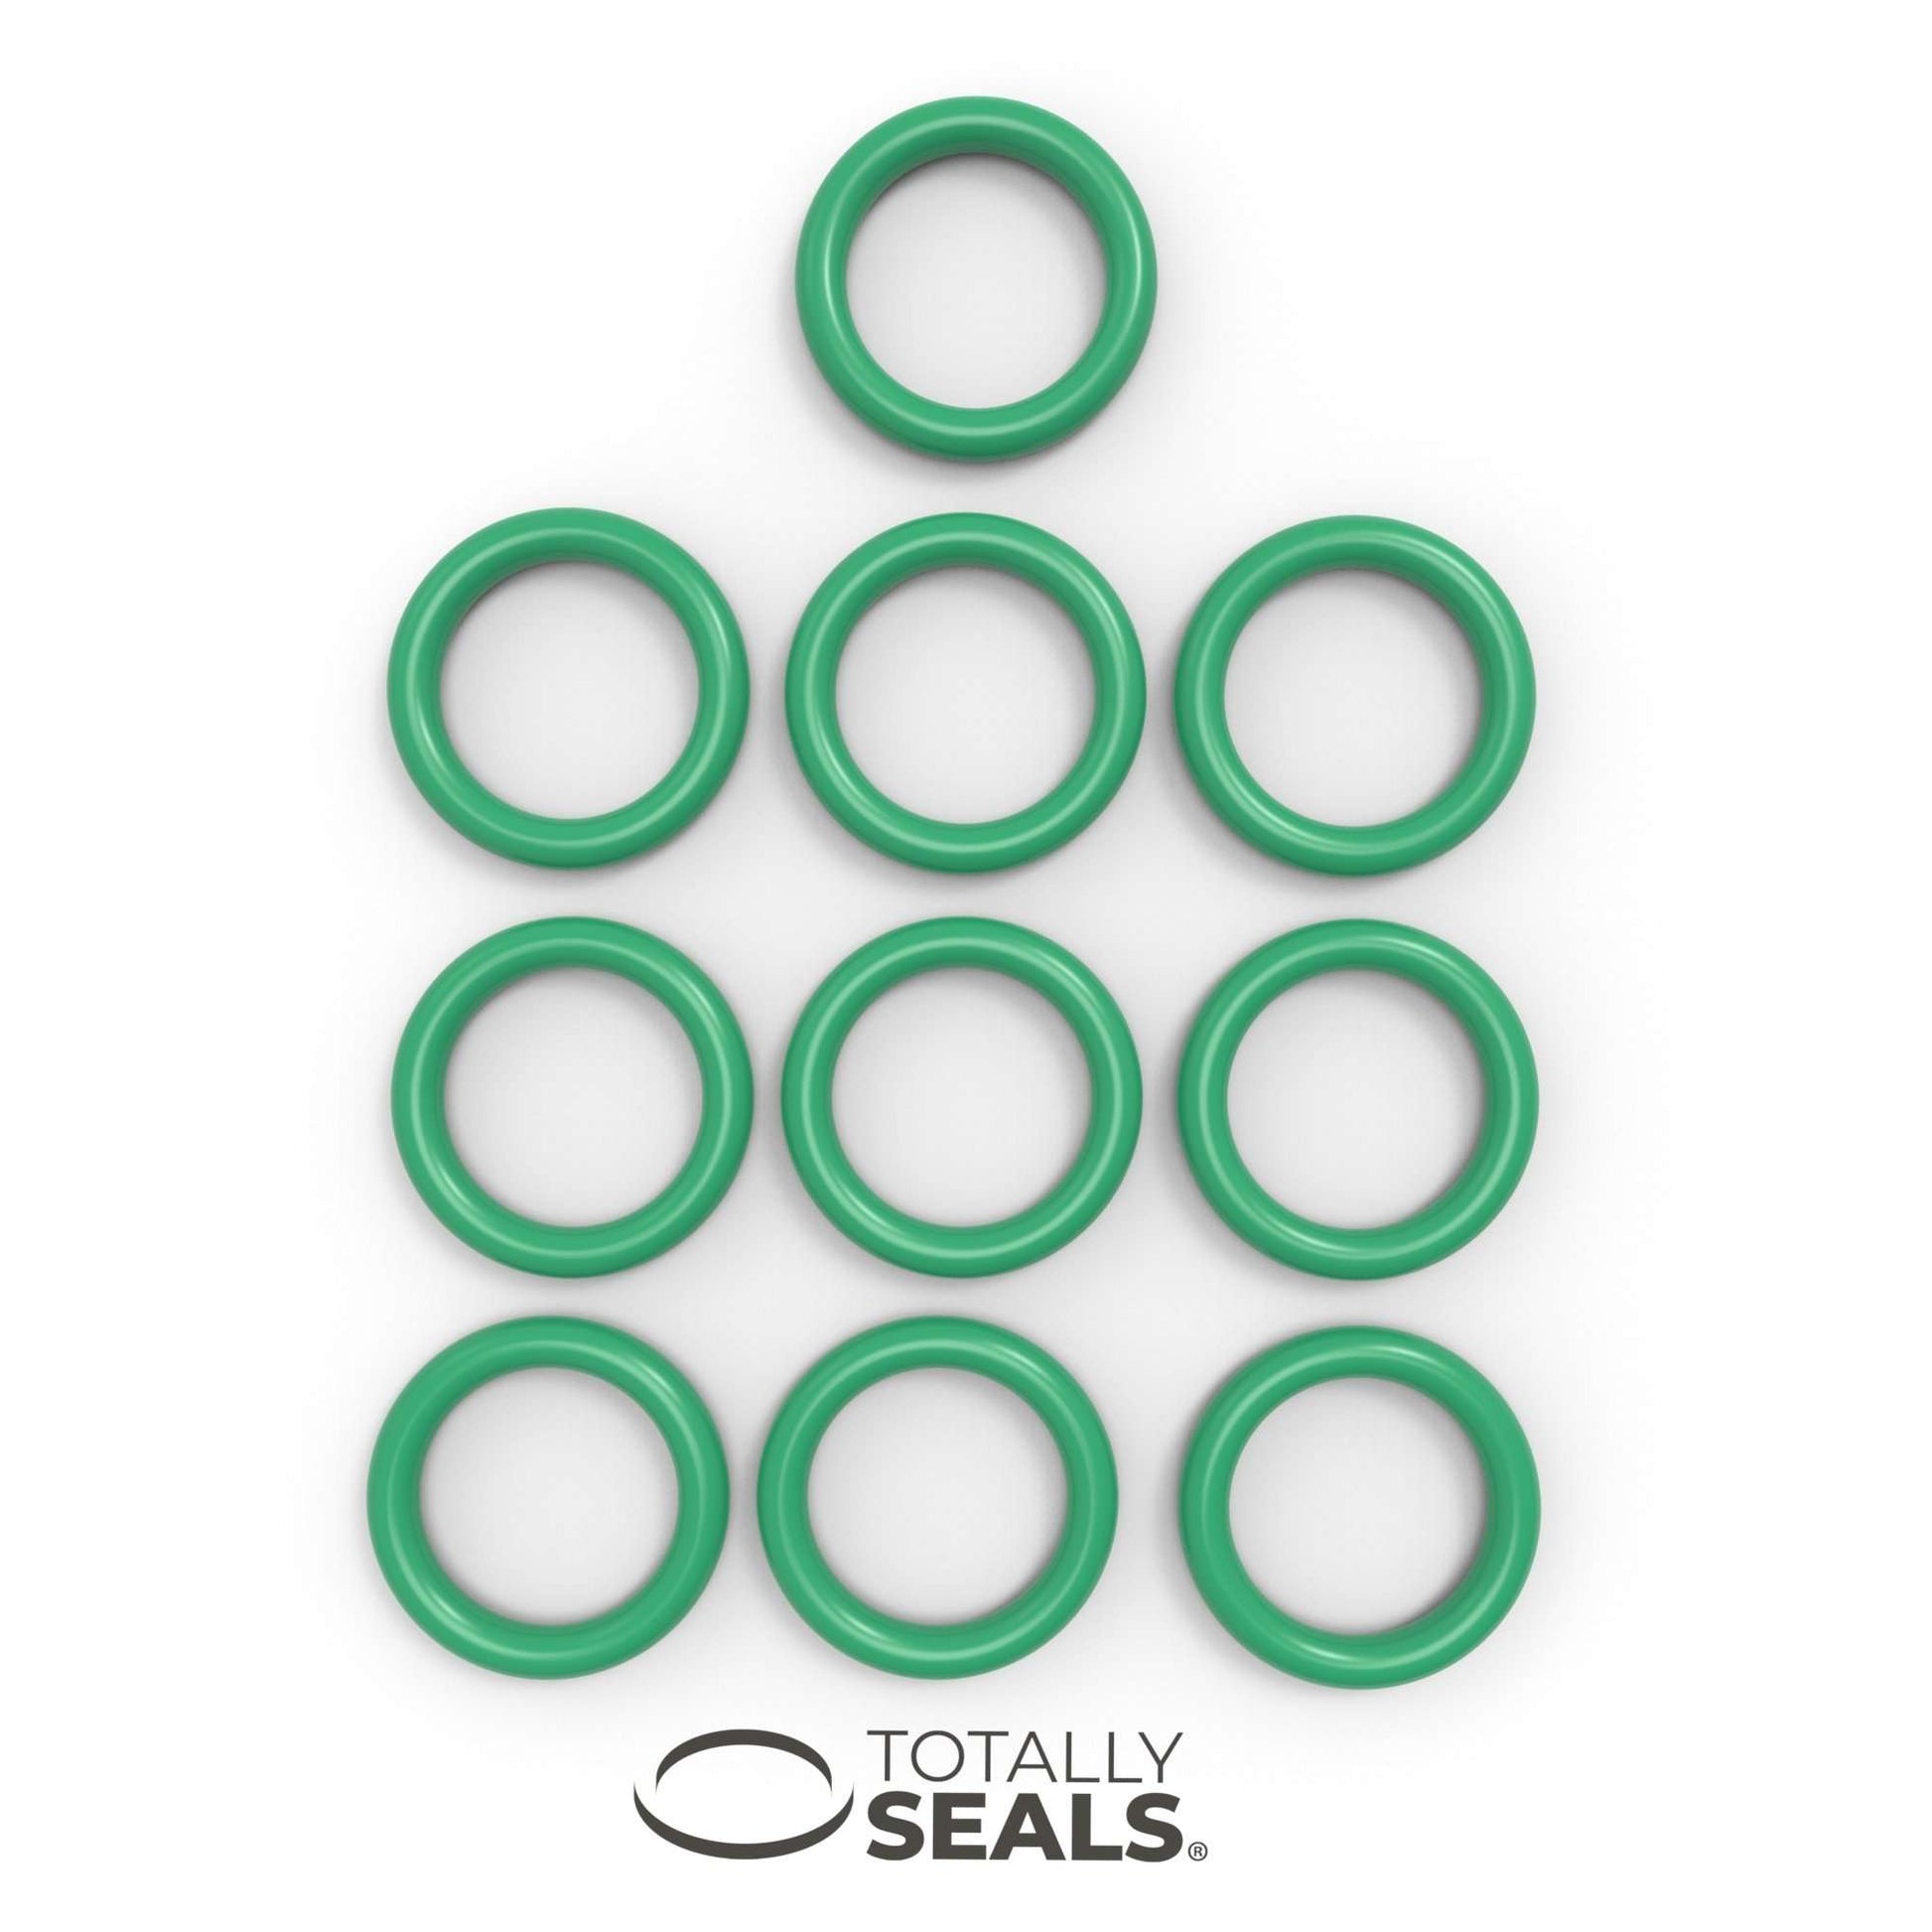 17mm x 2mm (21mm OD) FKM (Viton™) O-Rings - Totally Seals®